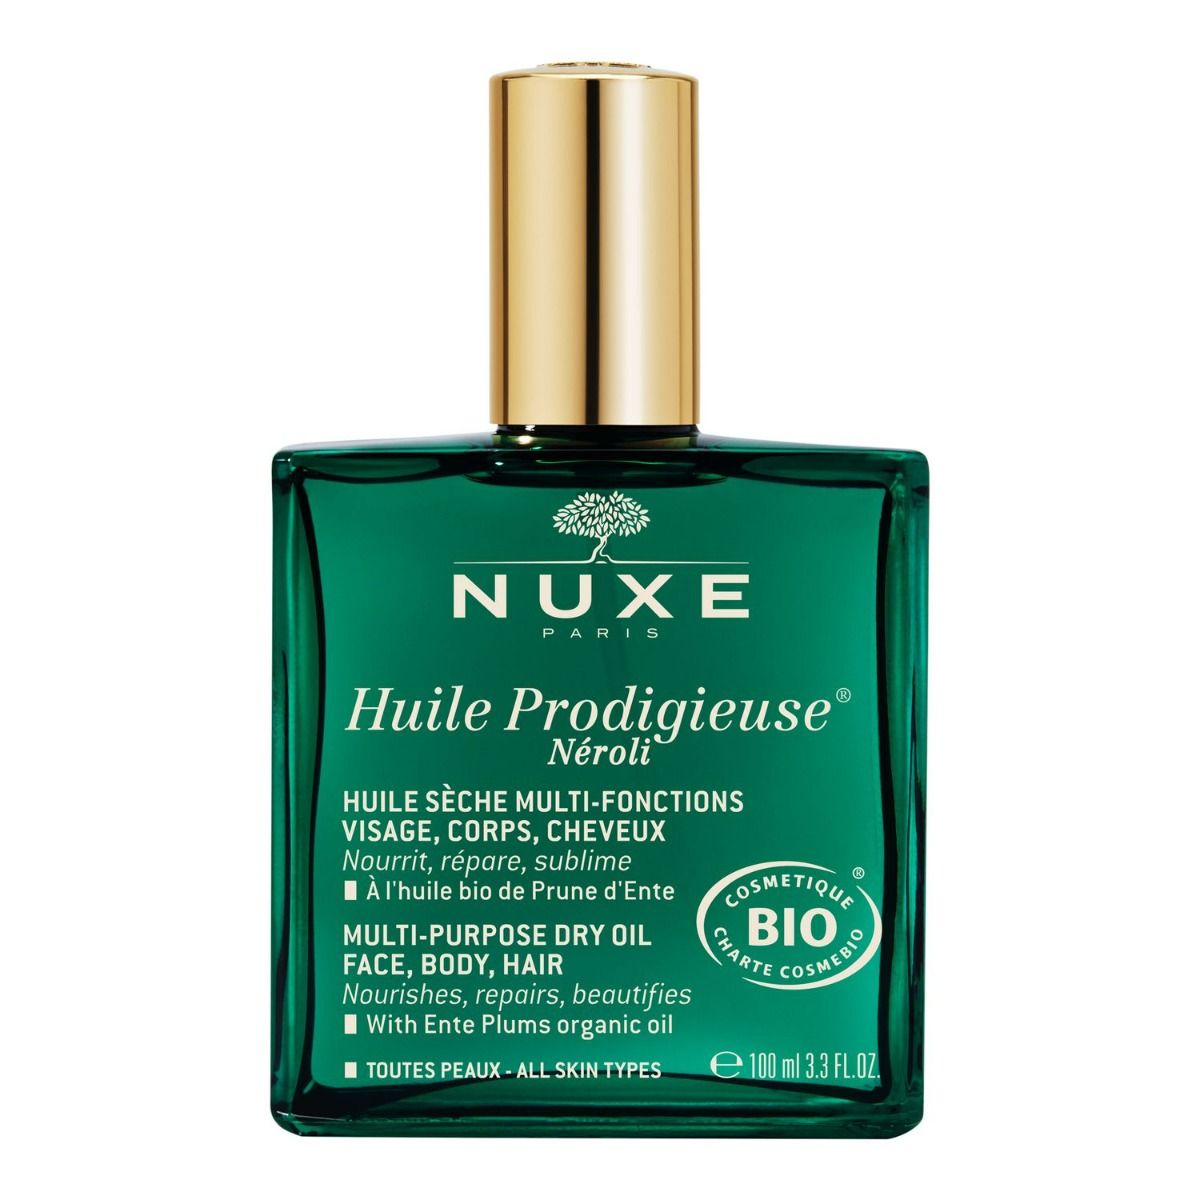 Nuxe Huile Prodigieuse Neroli масло для лица, тела и волос, 100 ml